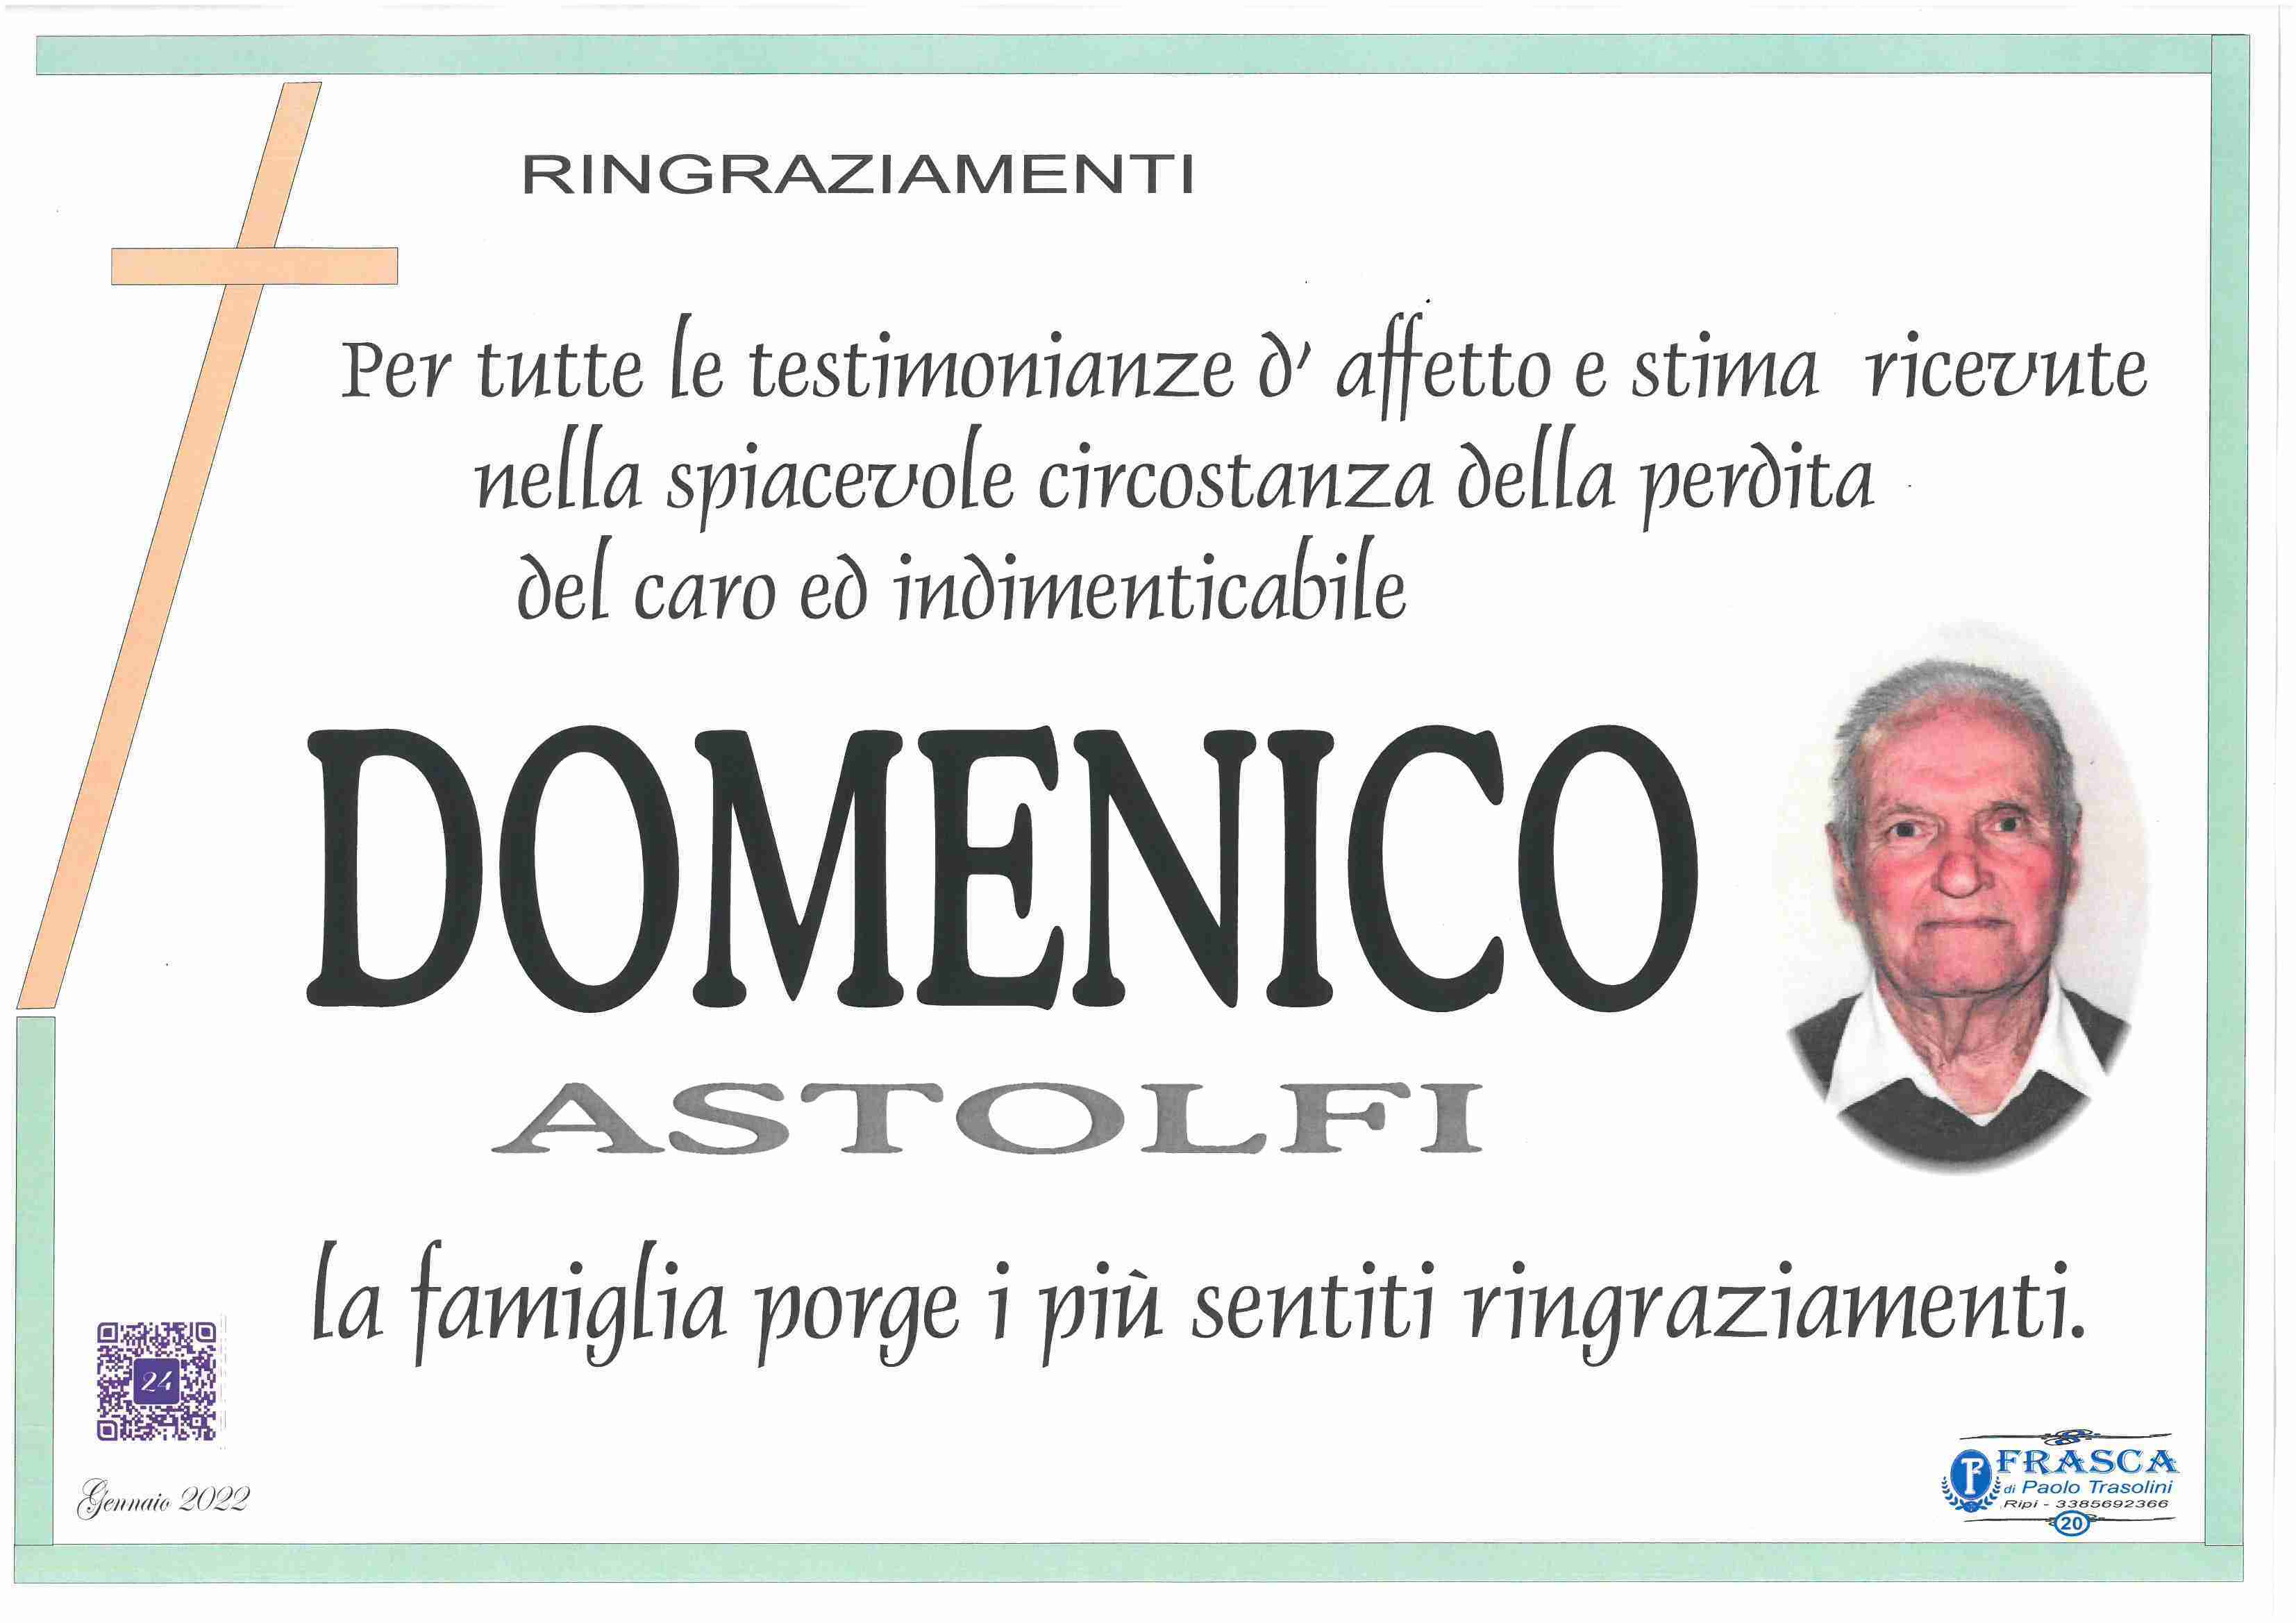 Domenico Astolfi